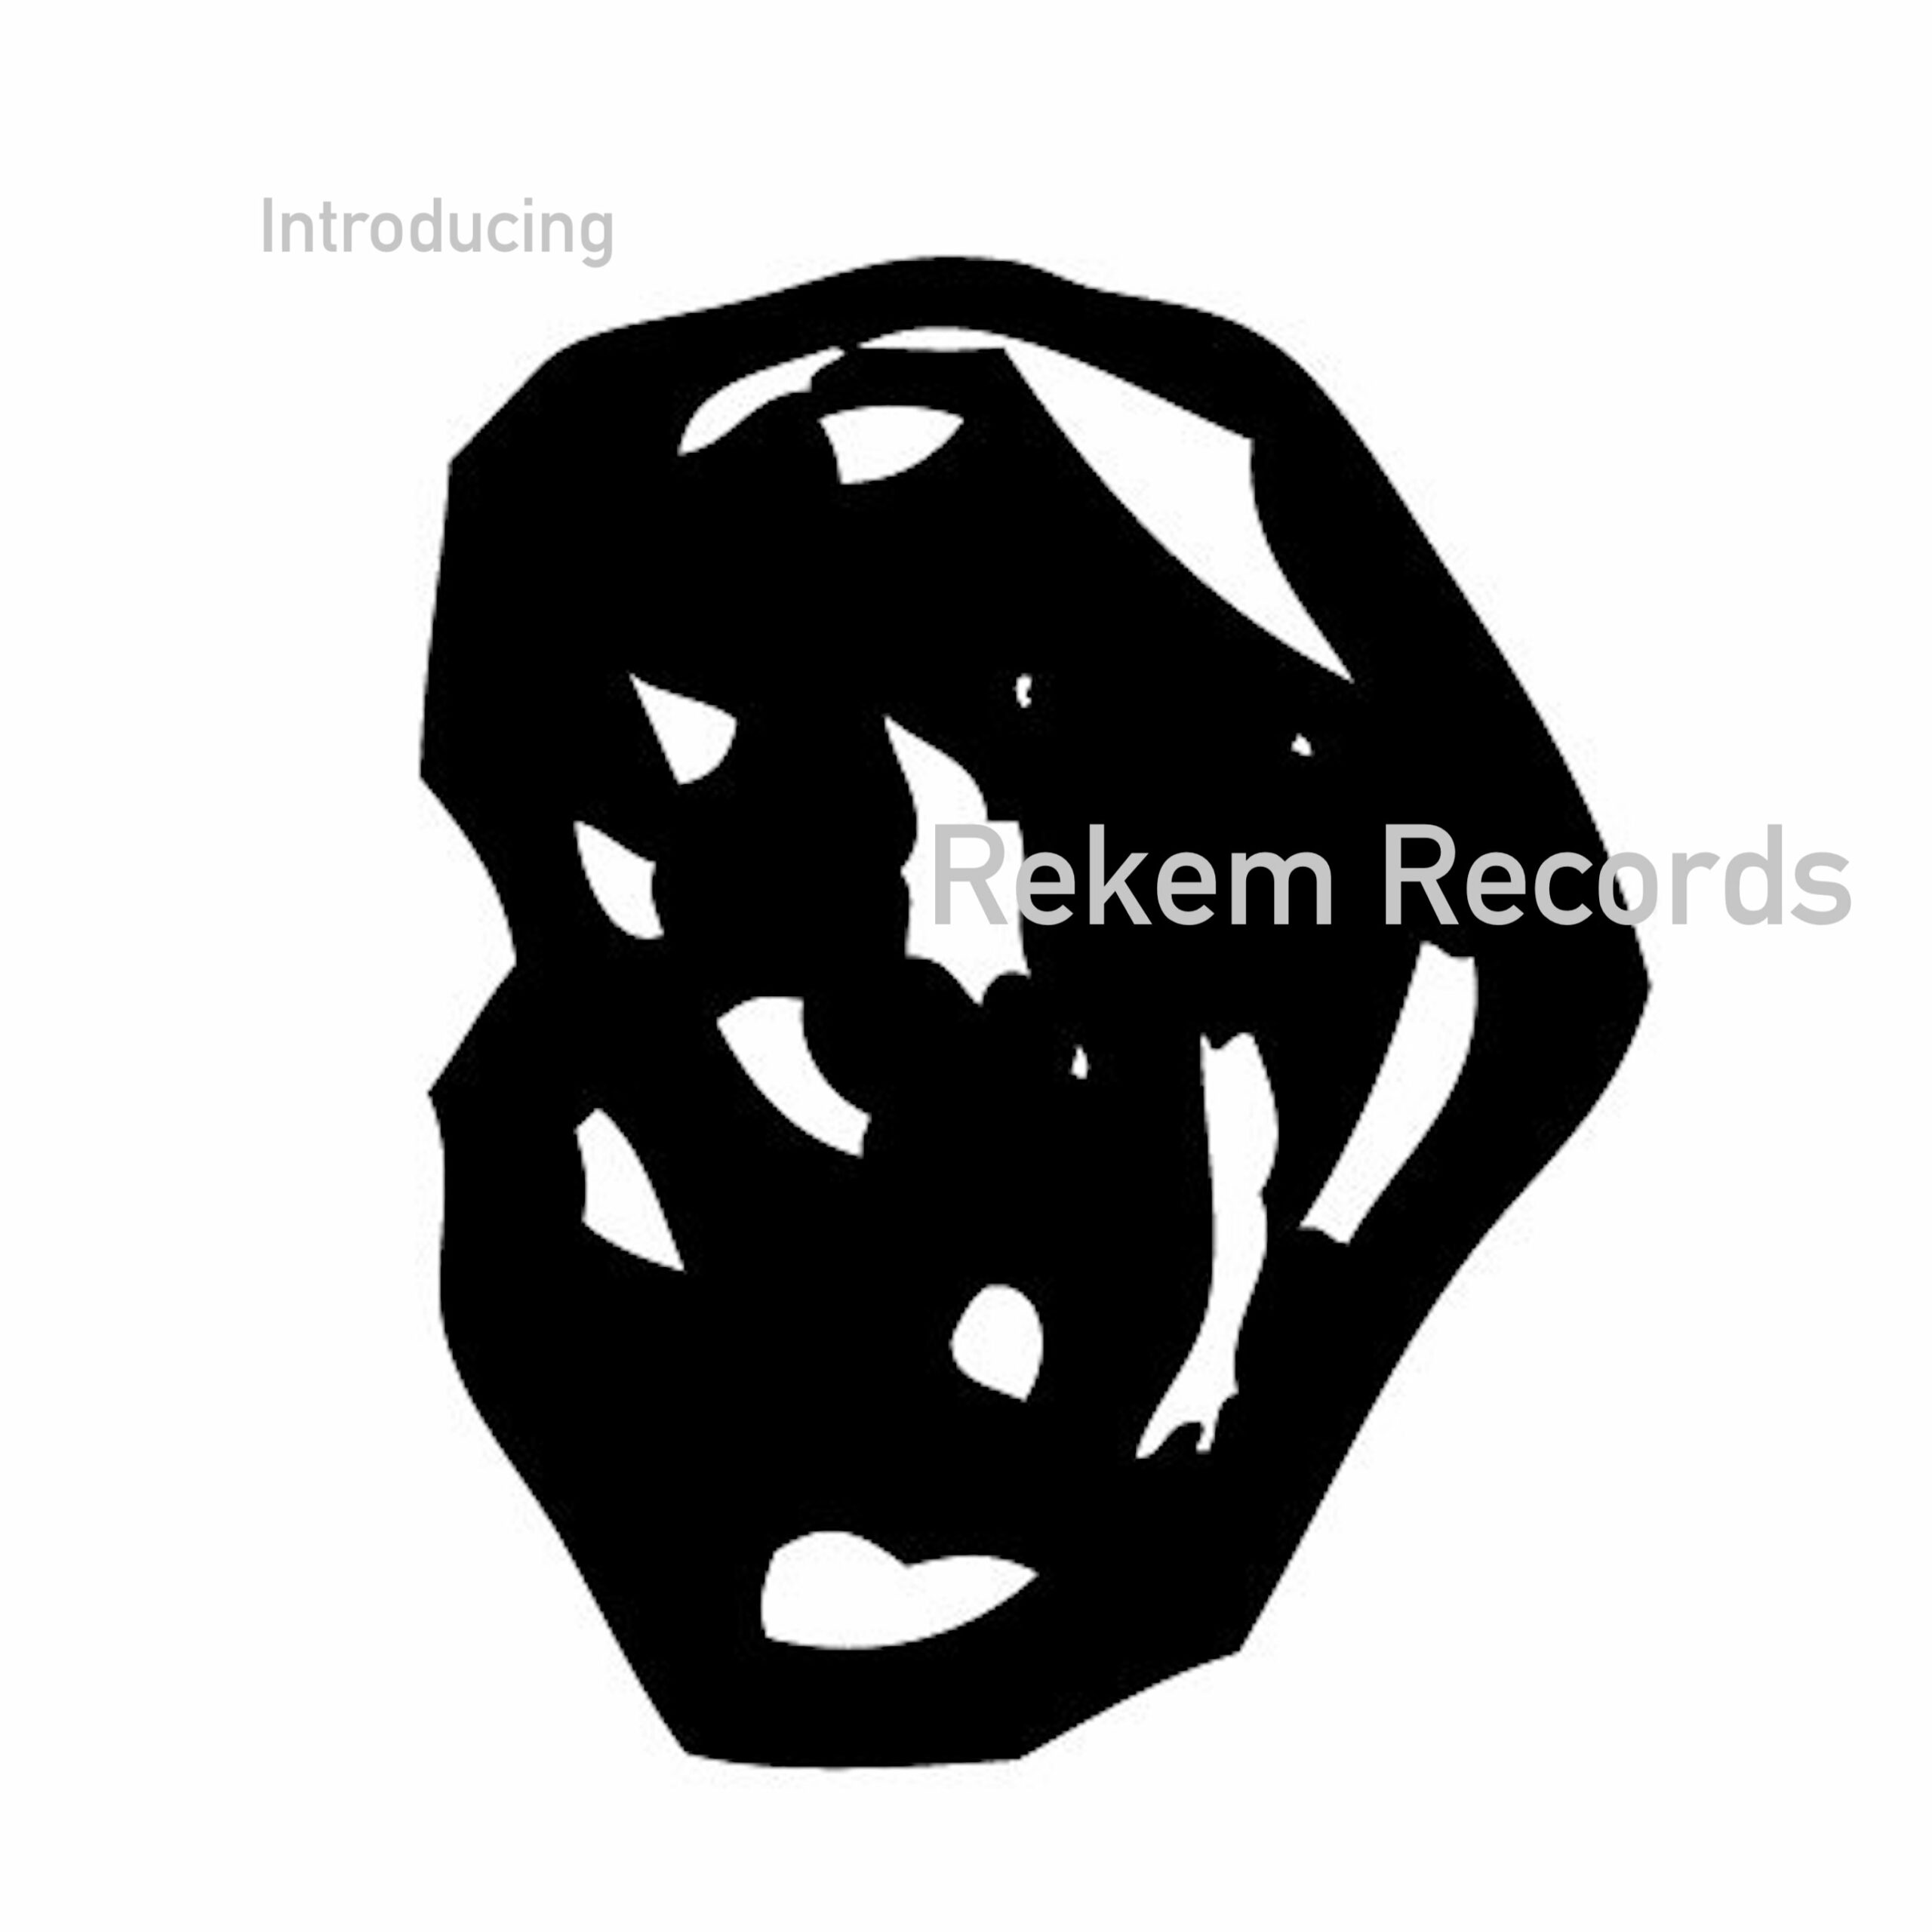 Introducing: Rekem Records